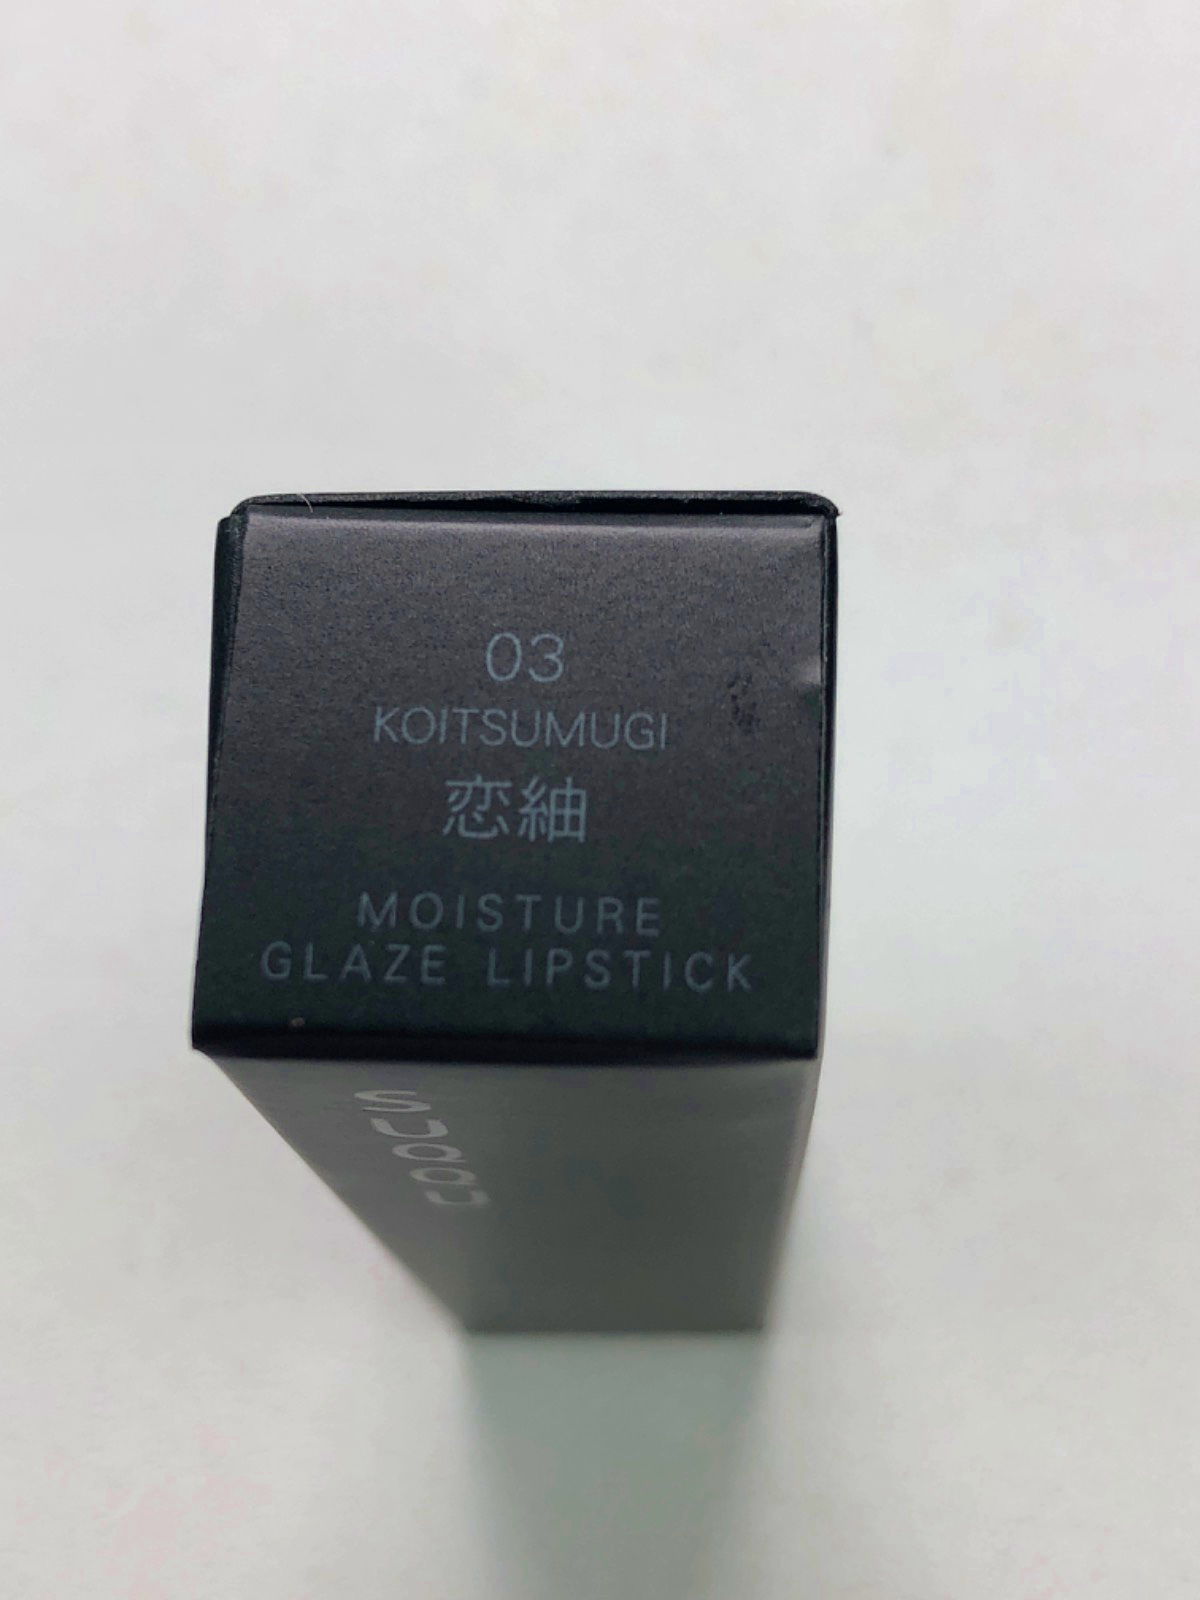 Suqqu Moisture Glaze Lipstick 03 Koitsumugi No Size